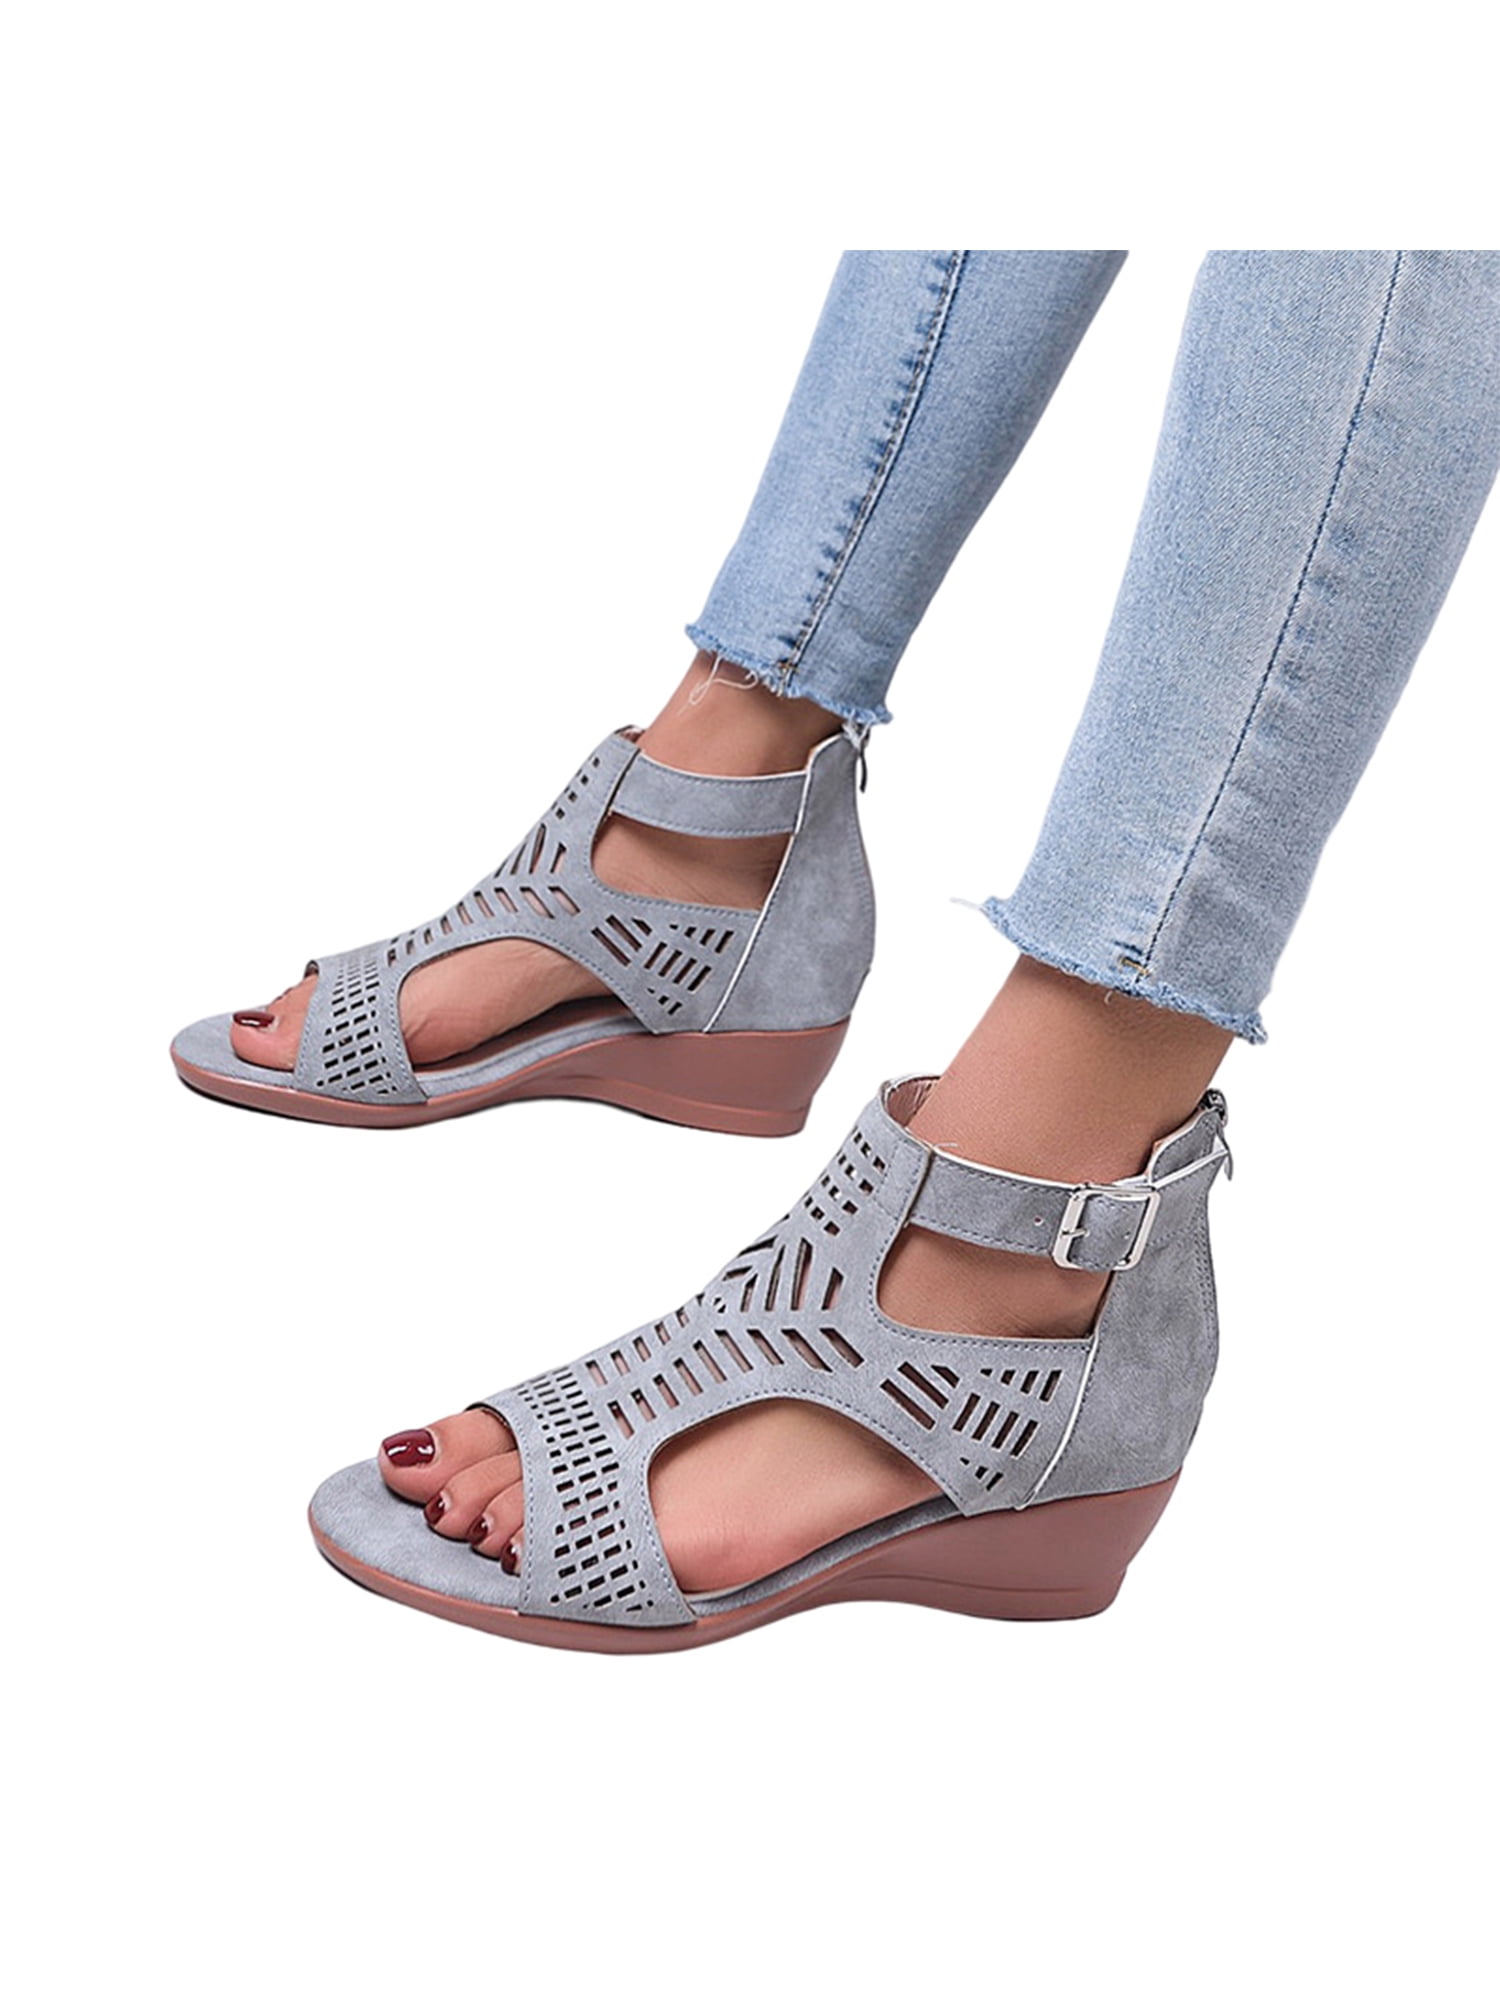 Womens Sandal T-strap Summer Shoes Wedge Heel Platform Peep Toe Strappy Size5-10